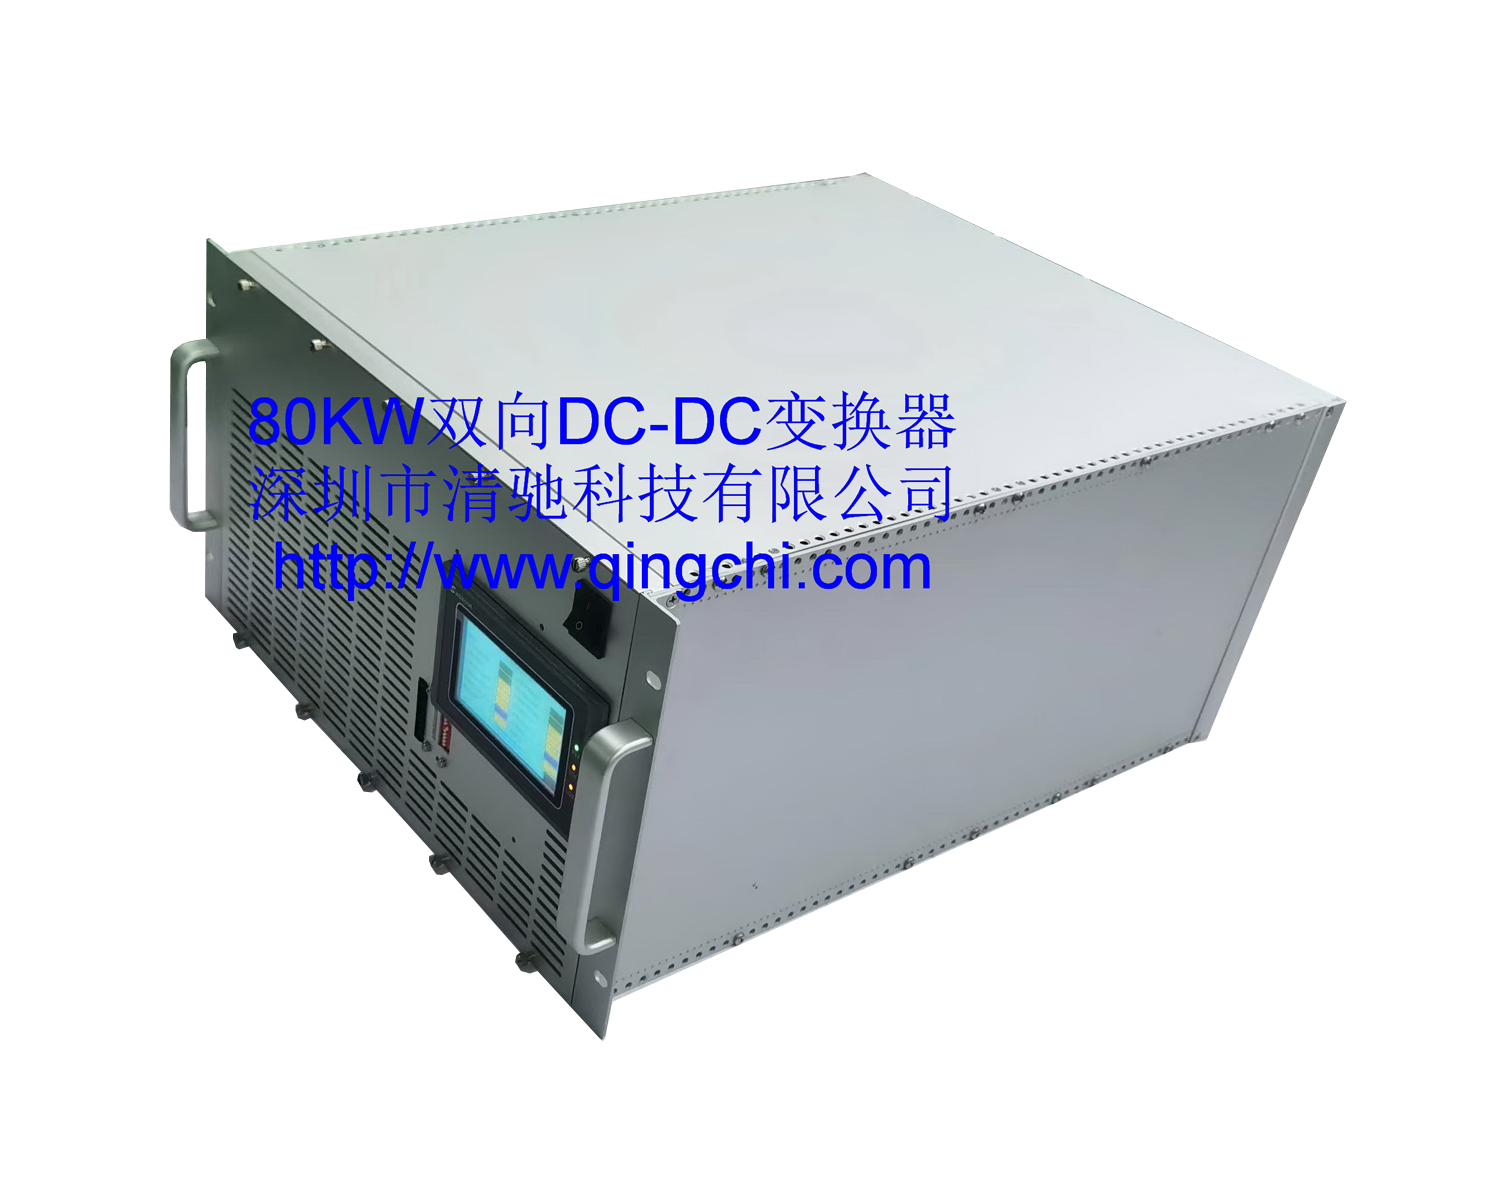 80KW fully digital bi-directional DCDC converter